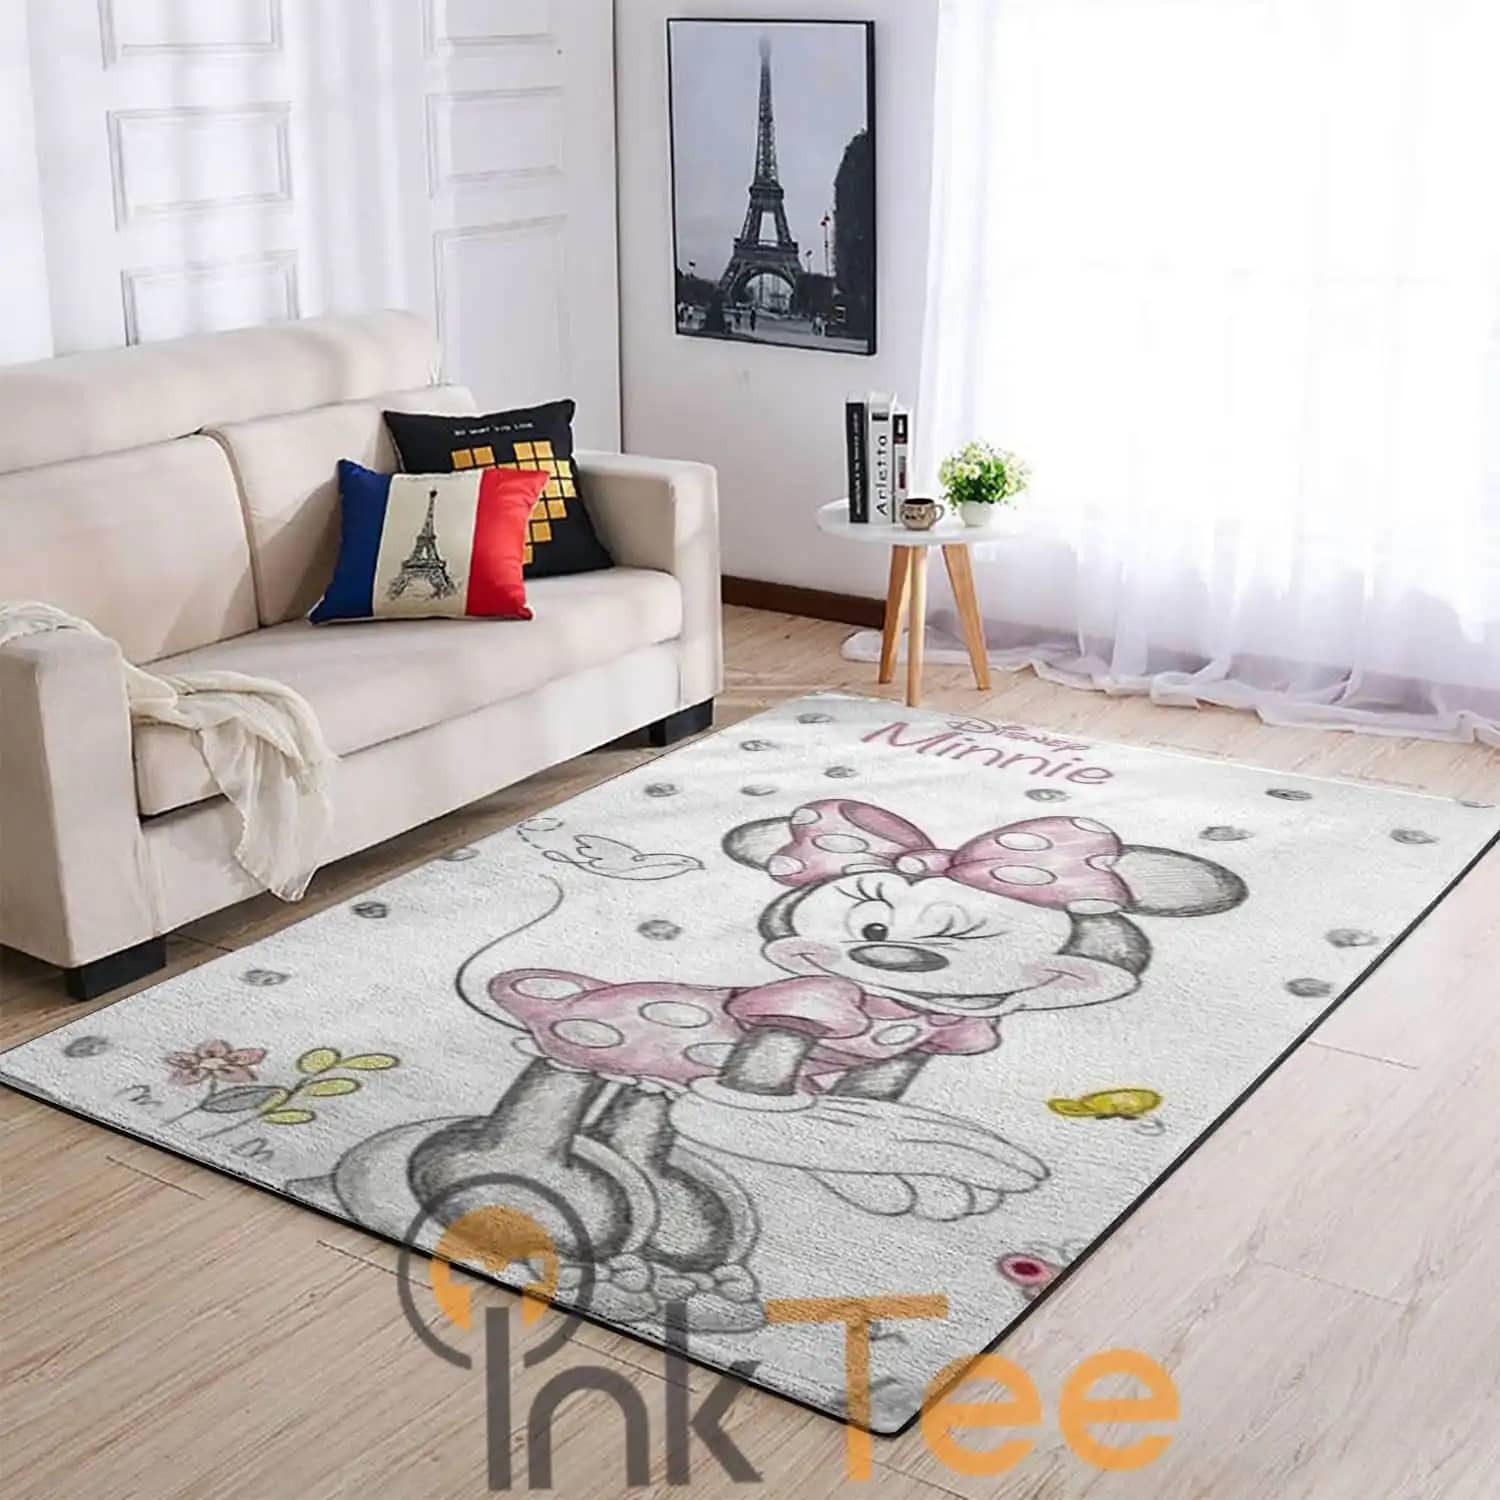 Disney Minnie Mickey Living Room Area Amazon Best Seller 4112 Rug